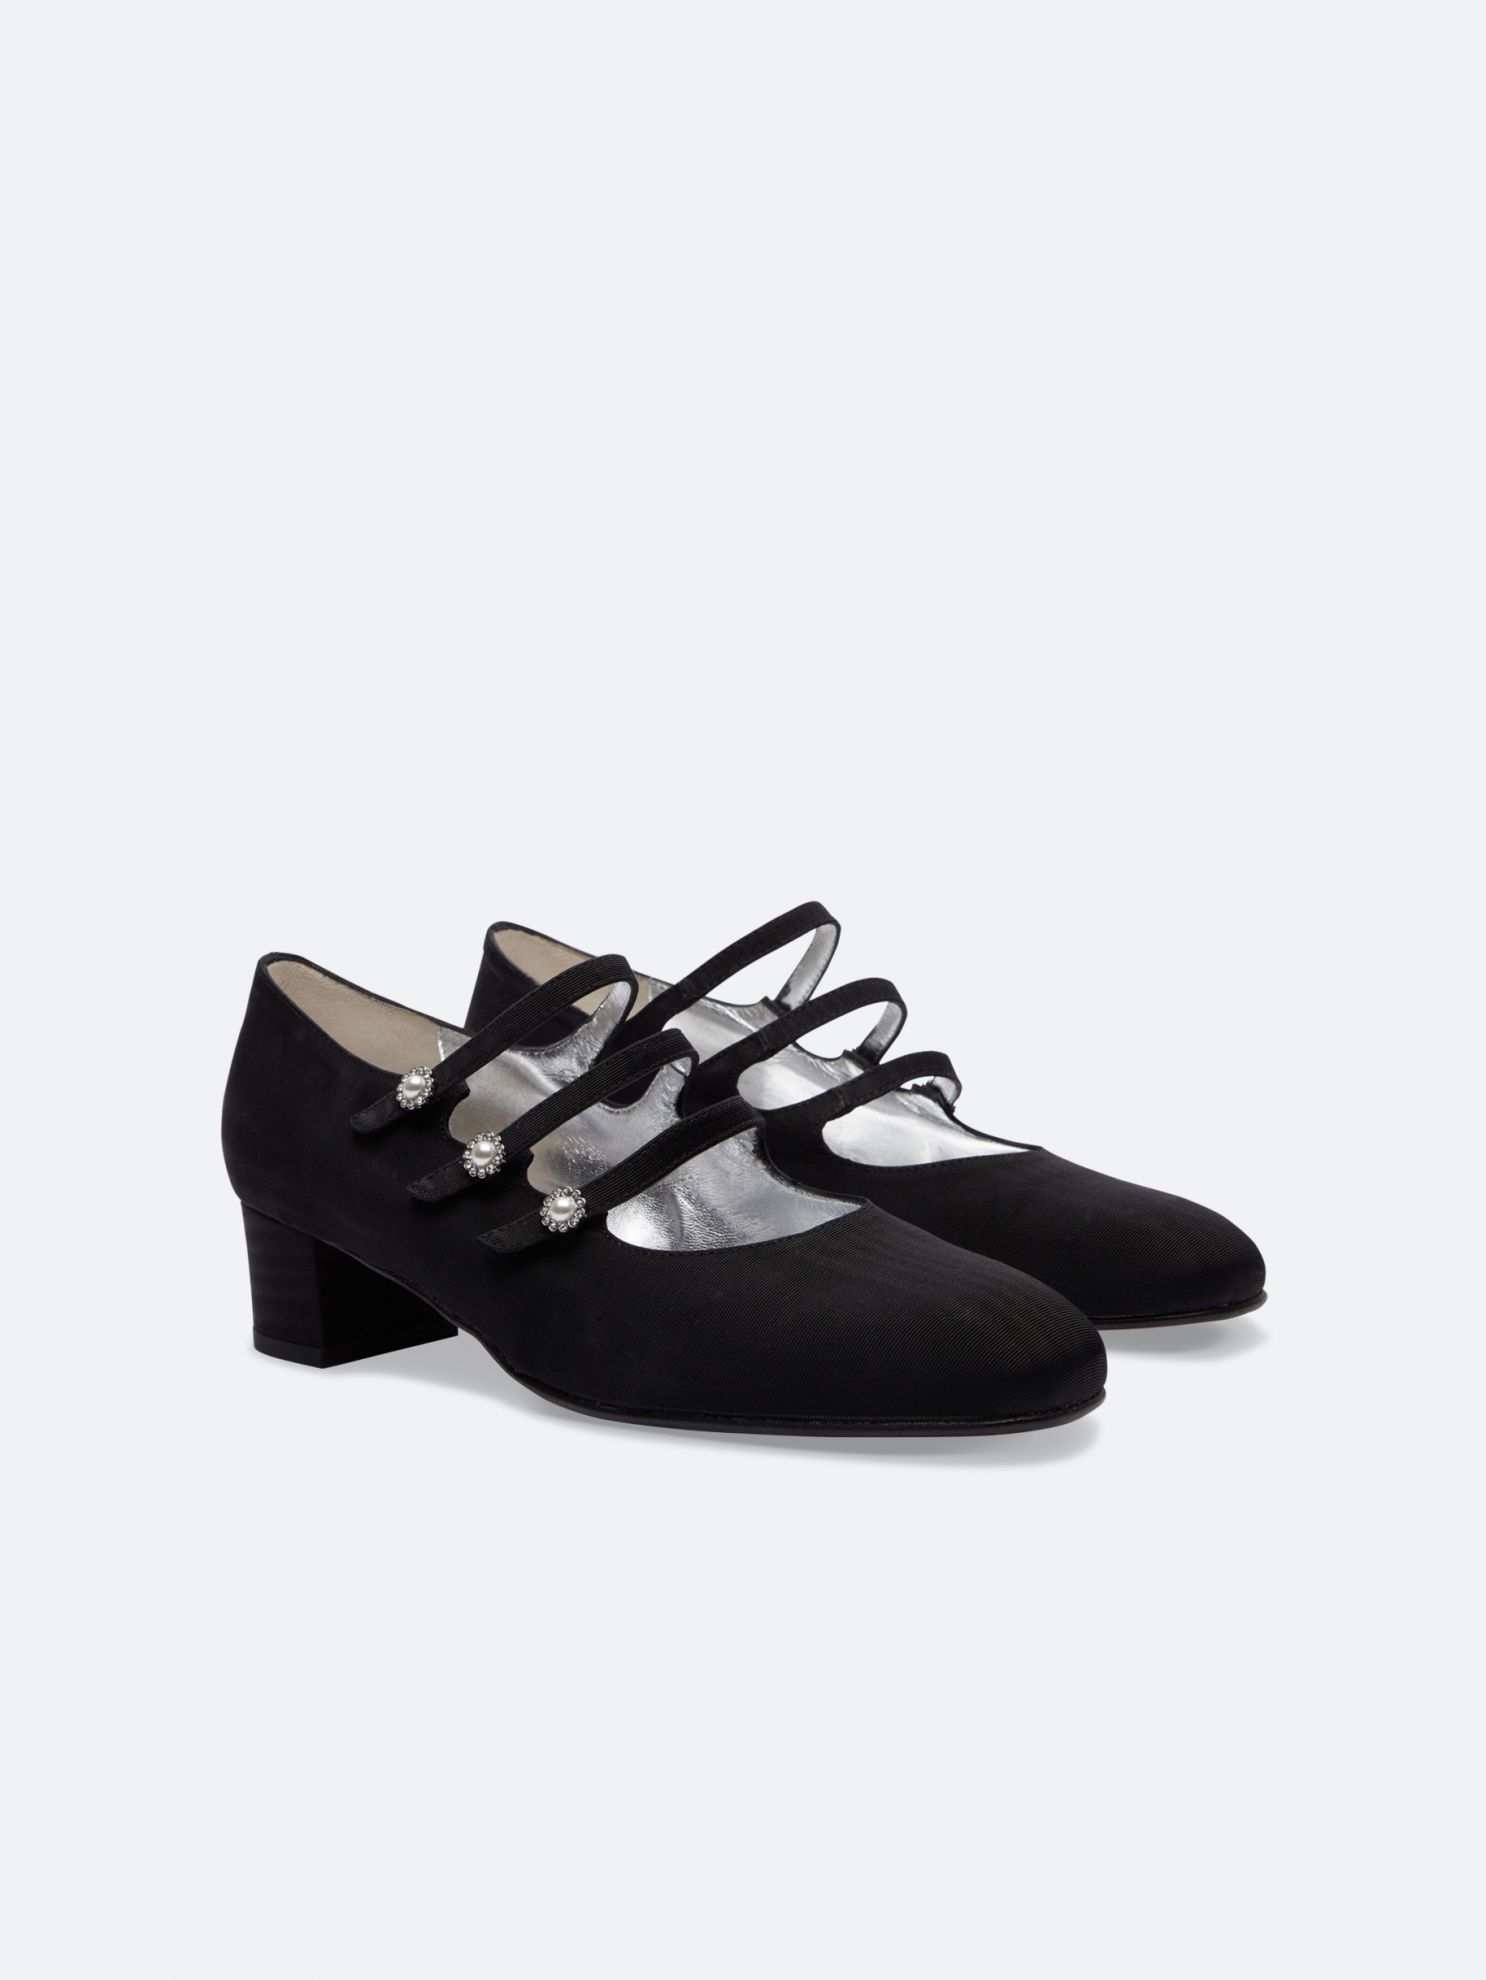 KINA black satin Mary Janes| Carel Paris Shoes